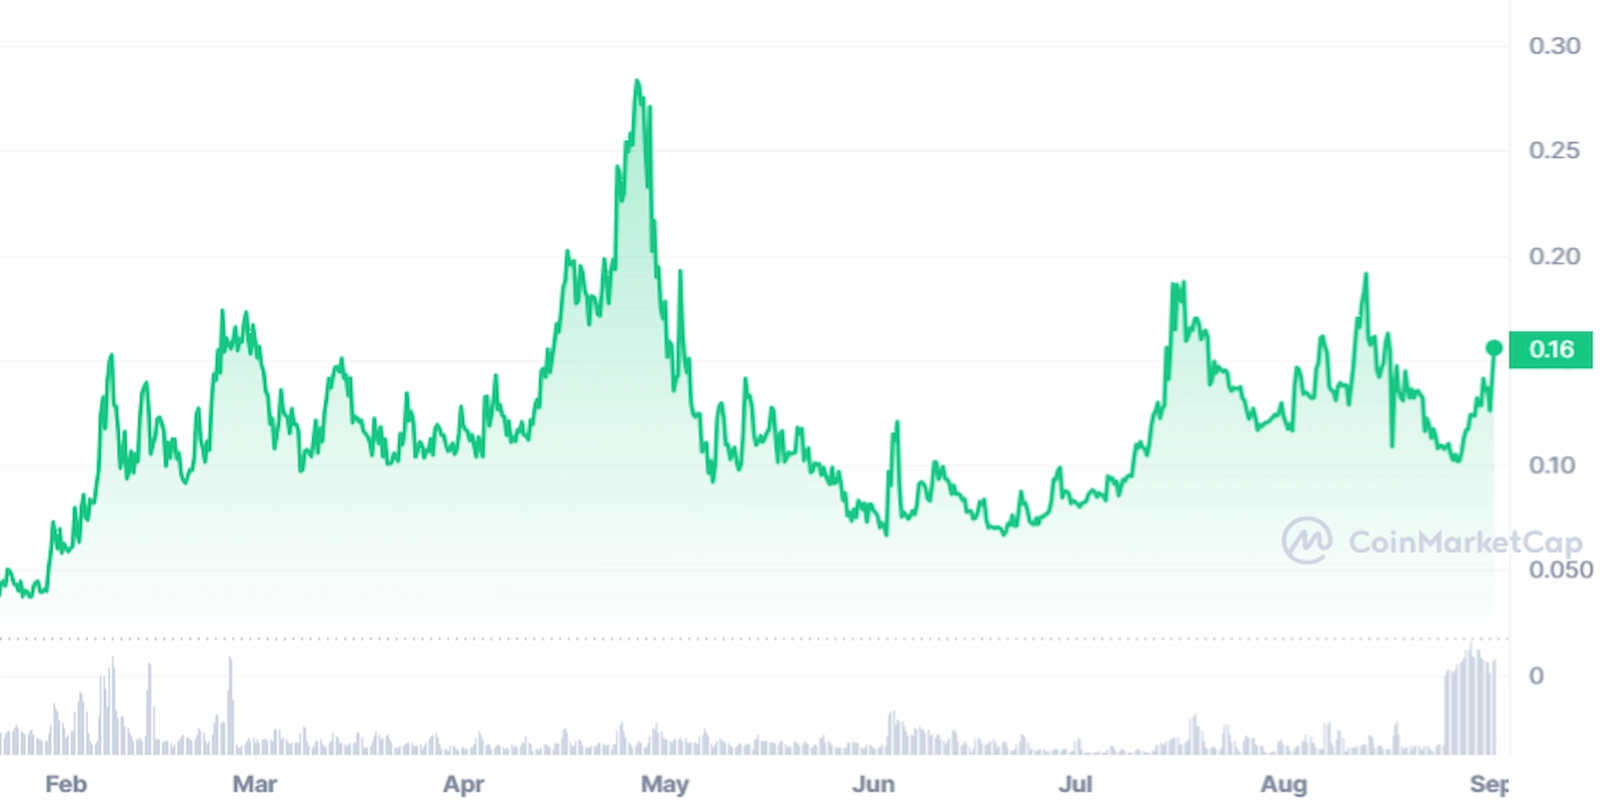 NFAI token price action since launch. 